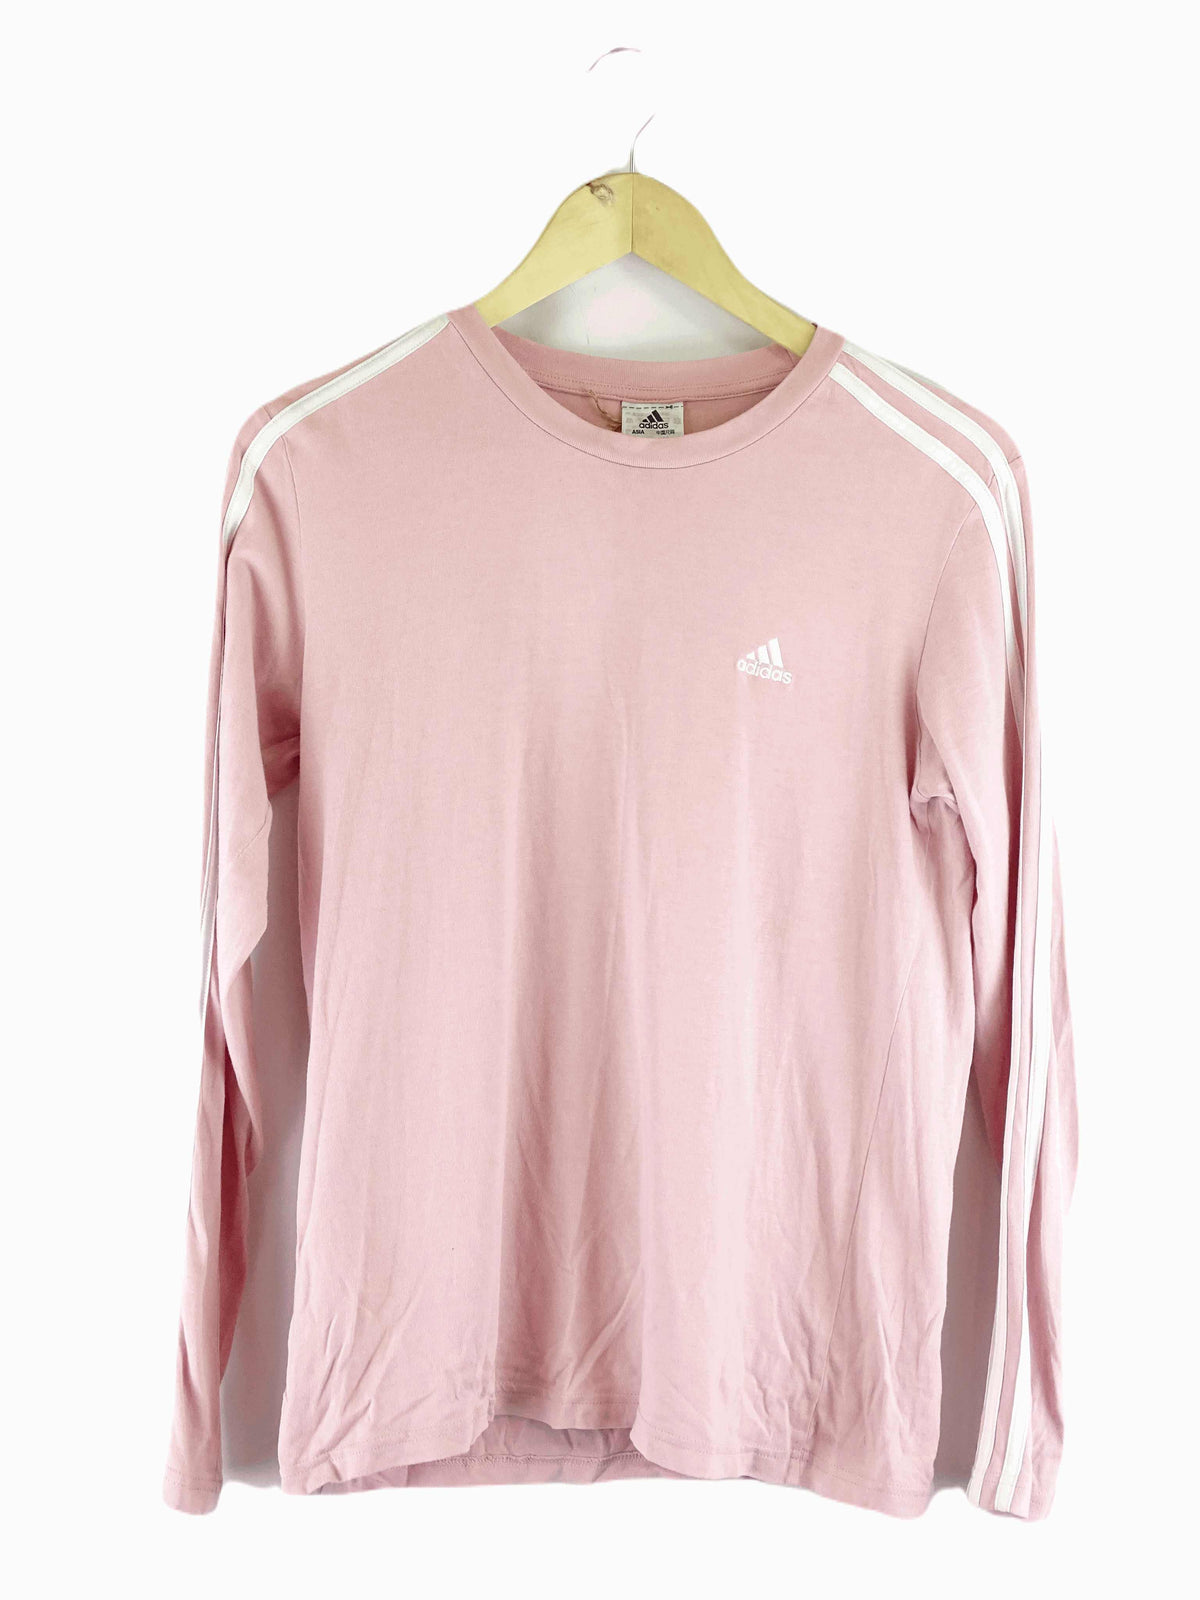 Adidas Pink Long Sleeve Top M